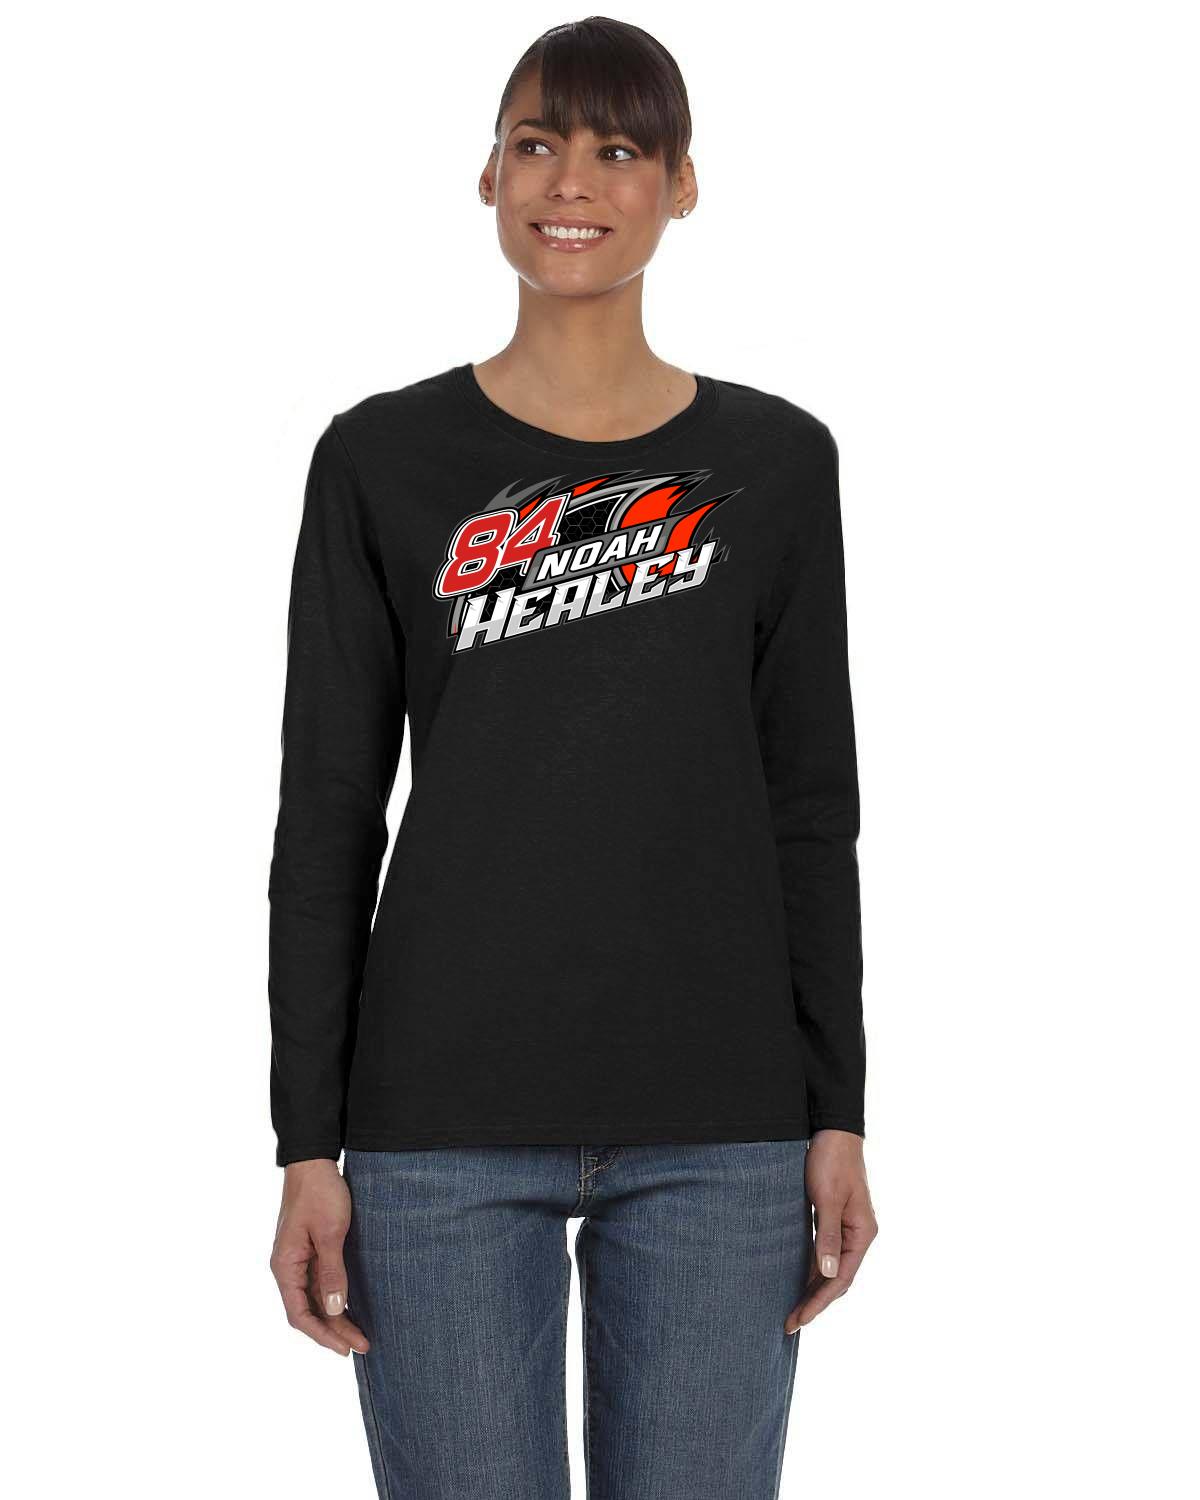 Noah Healey Racing Ladies' Long-Sleeve T-Shirt